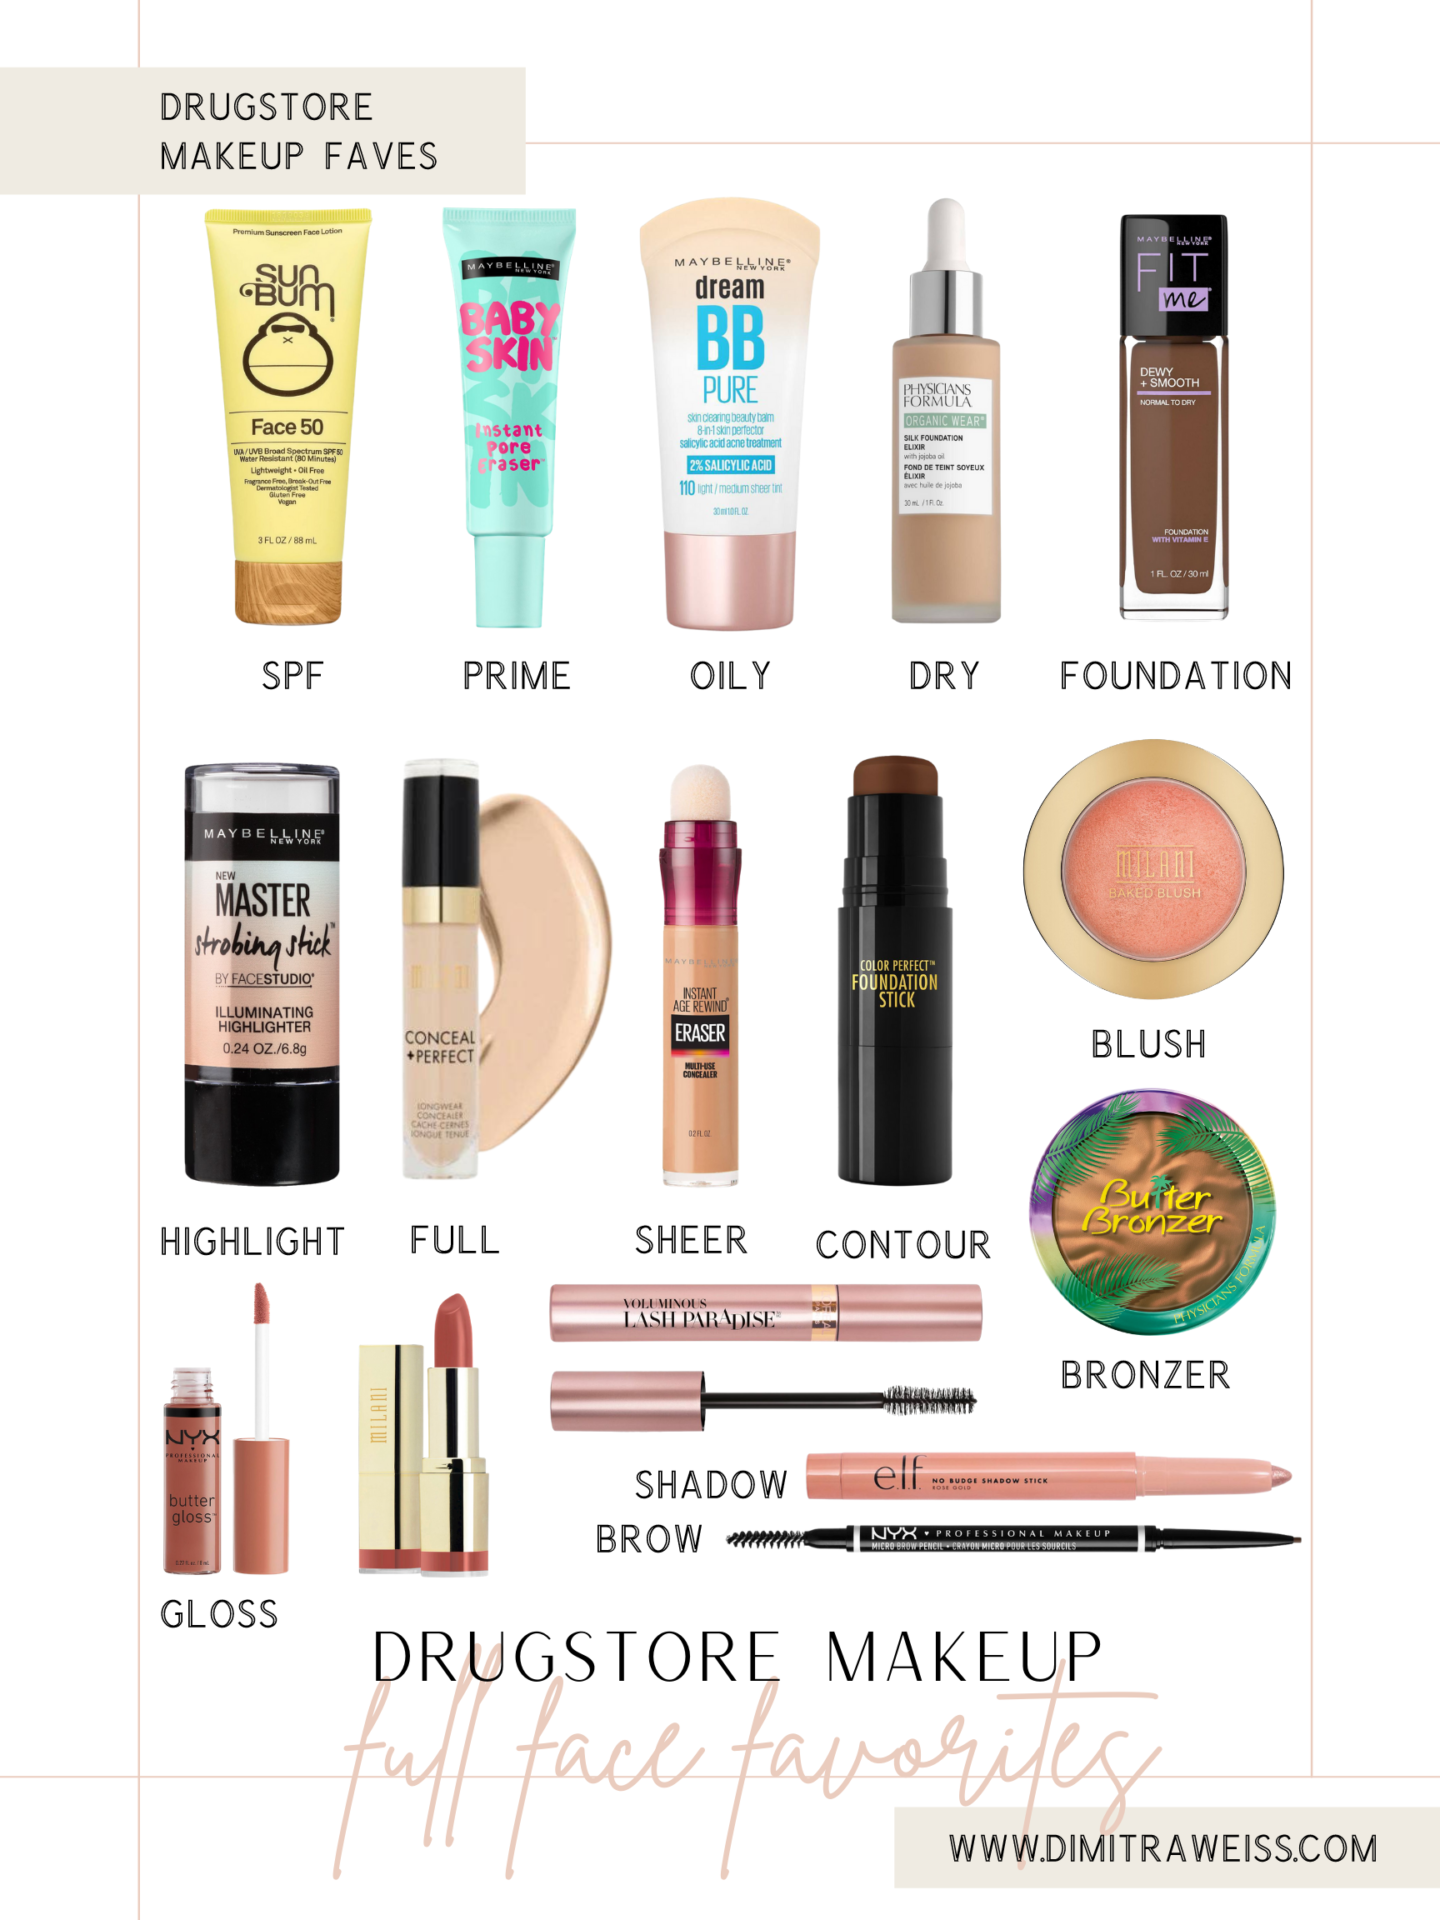 Drugstore Makeup 2 1440x1920 